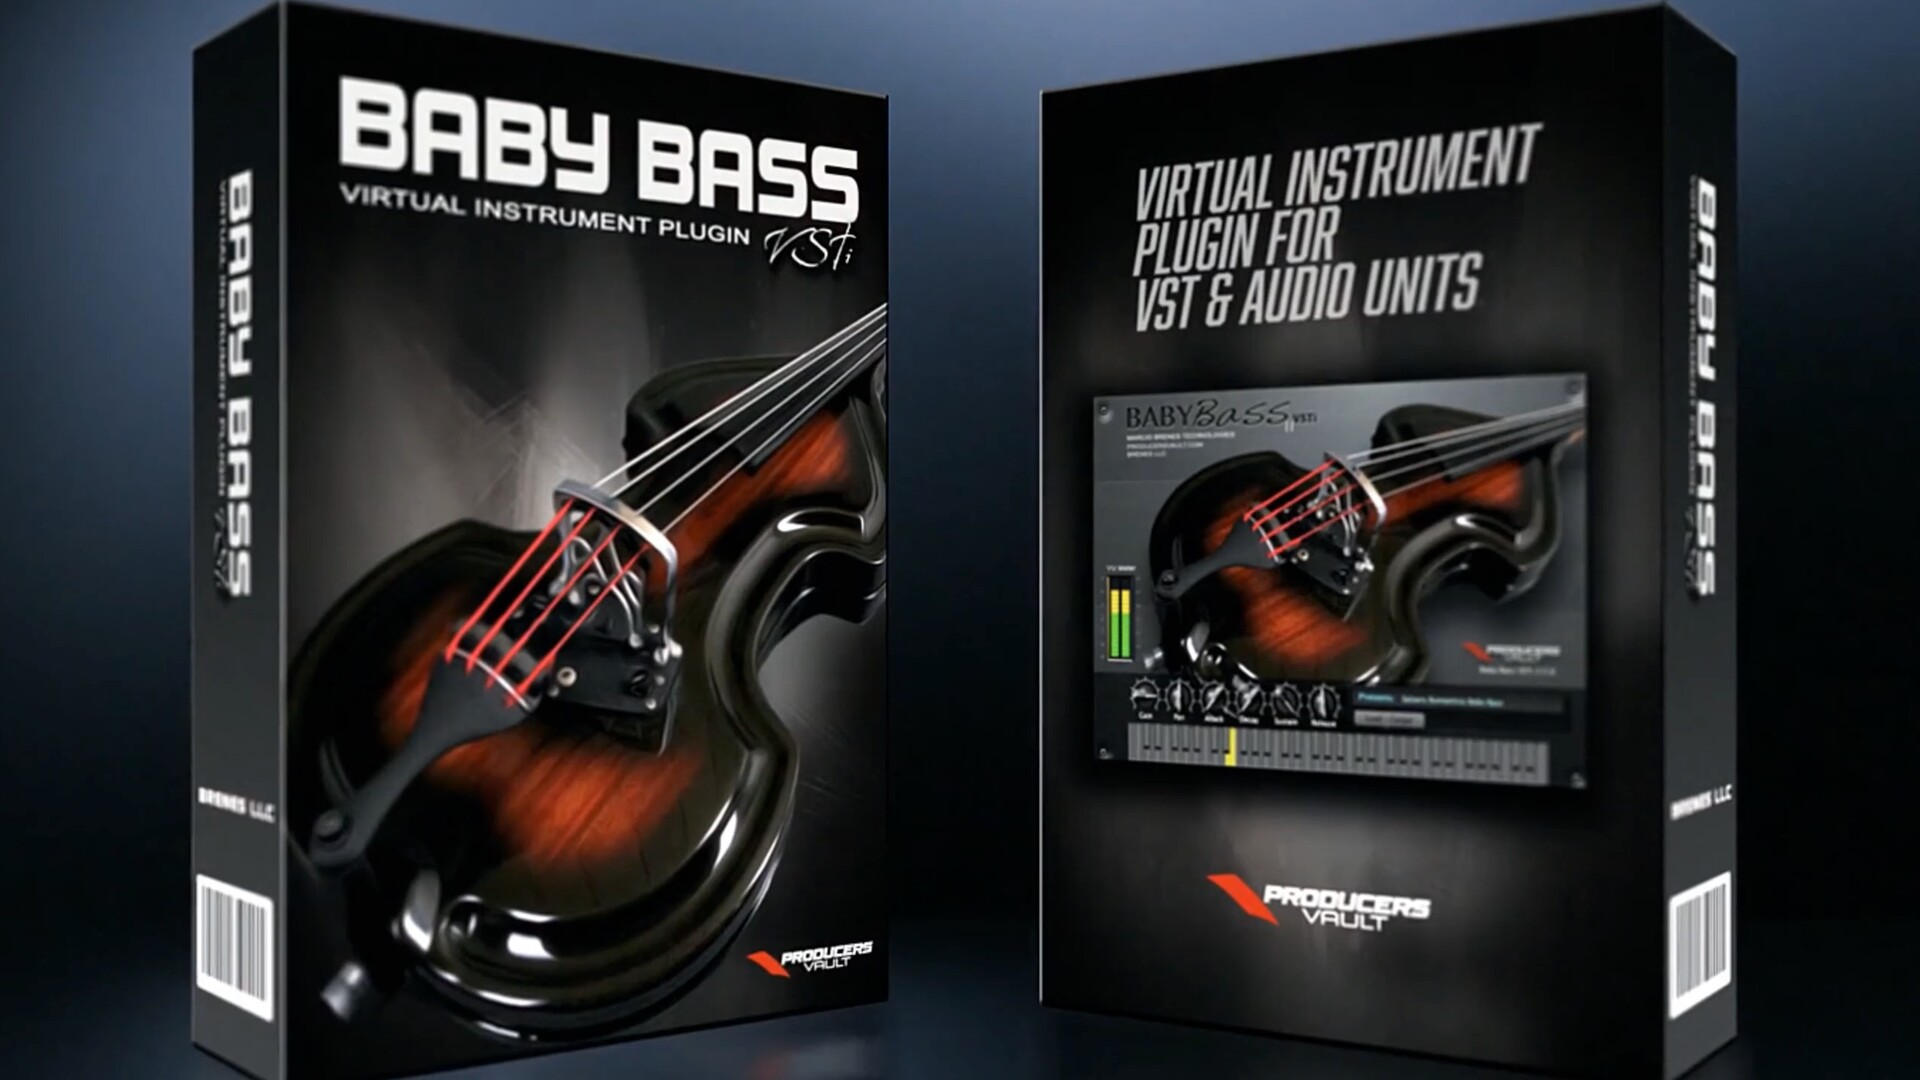 Producers Vault Baby Bass VSTi for mac(虚拟乐器)